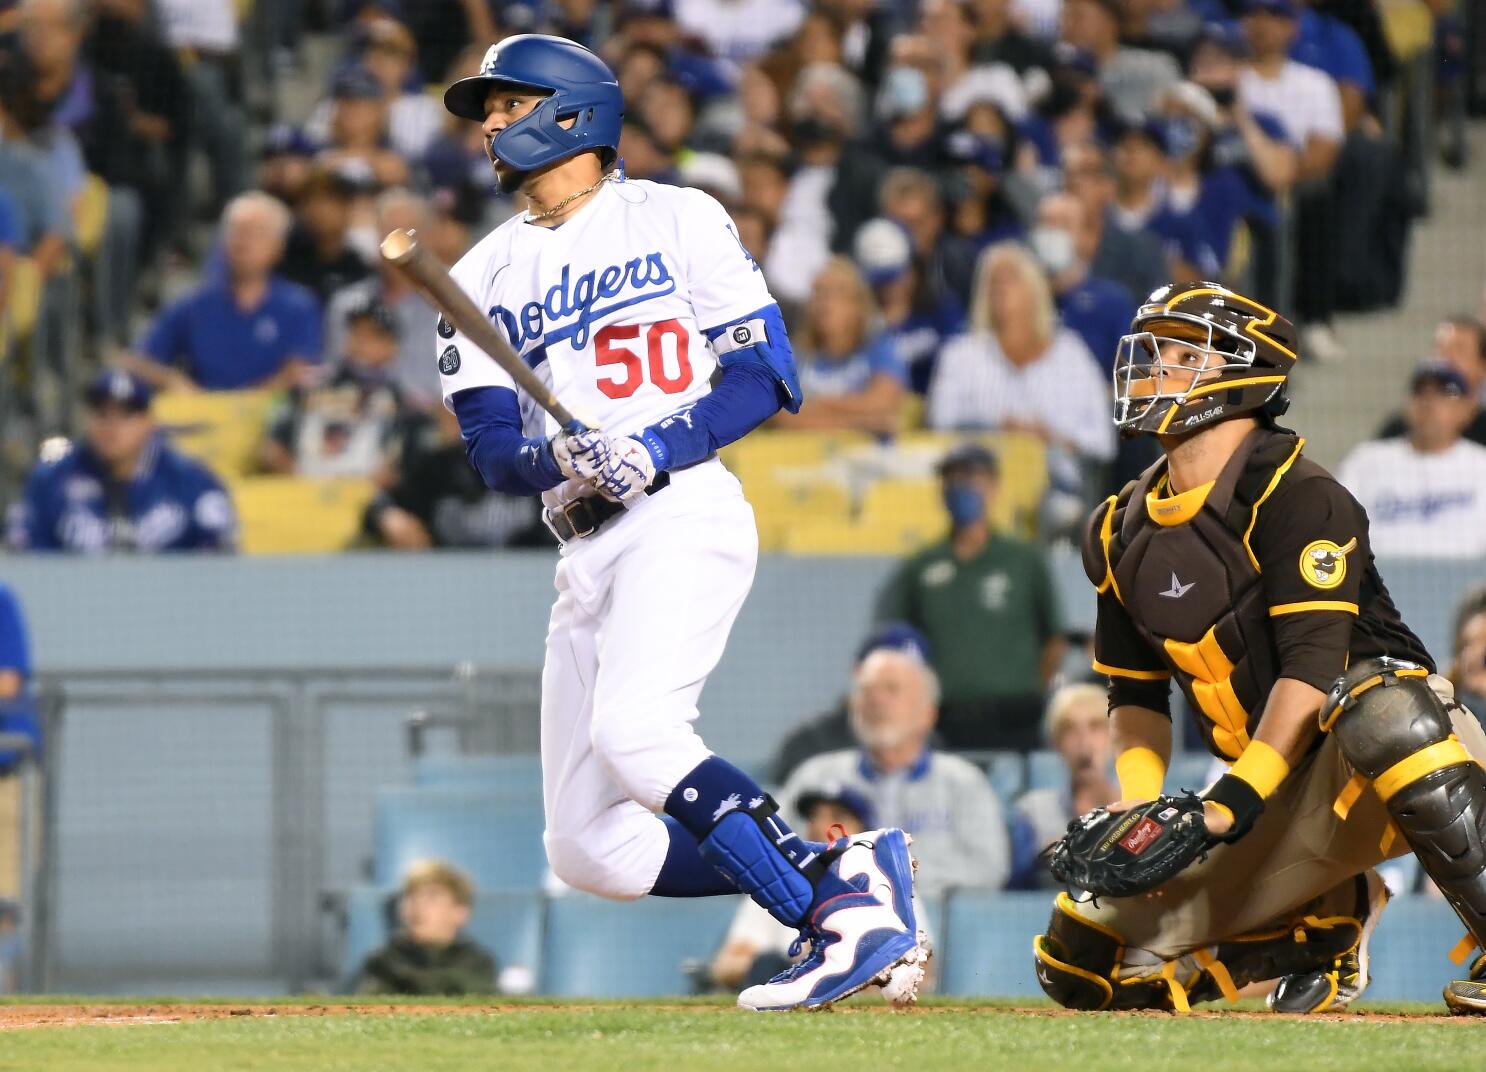 Justin Turner walk-off home run keeps Dodgers undefeated - True Blue LA